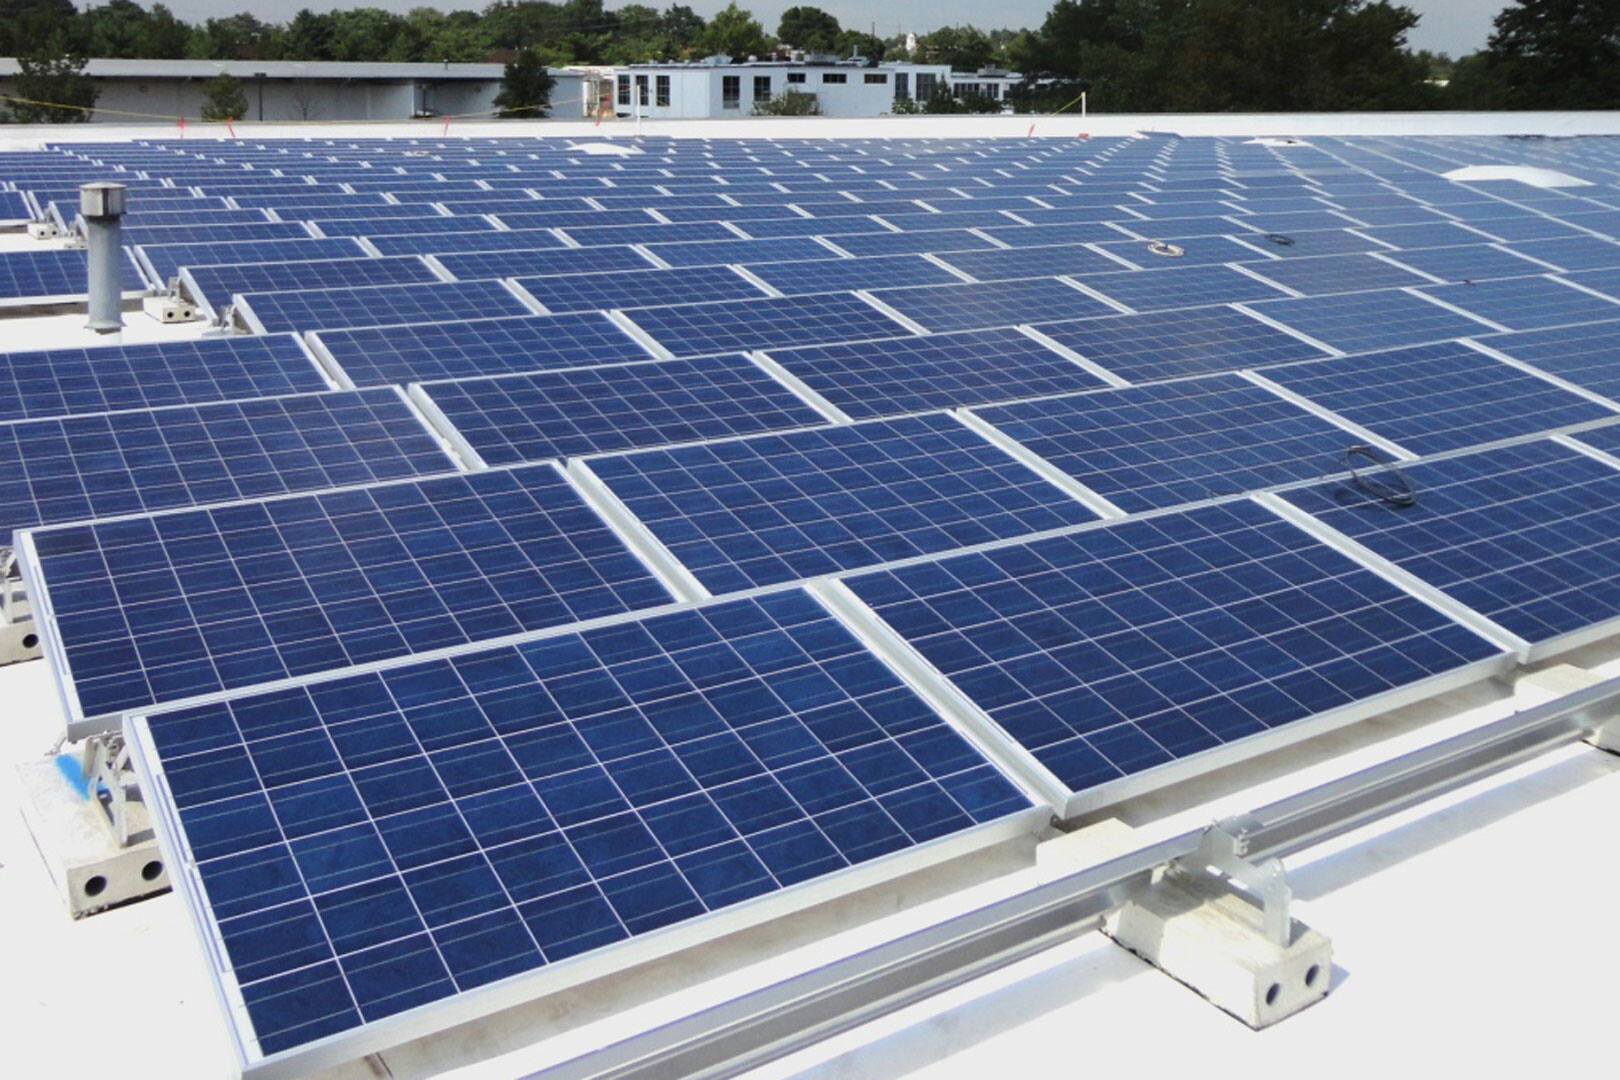 More information about "Ember: Η ηλιακή ενέργεια μπορεί να παρέχει το 20% της παγκόσμιας ηλεκτρικής ενέργειας στο βόρειο θερινό ηλιοστάσιο"